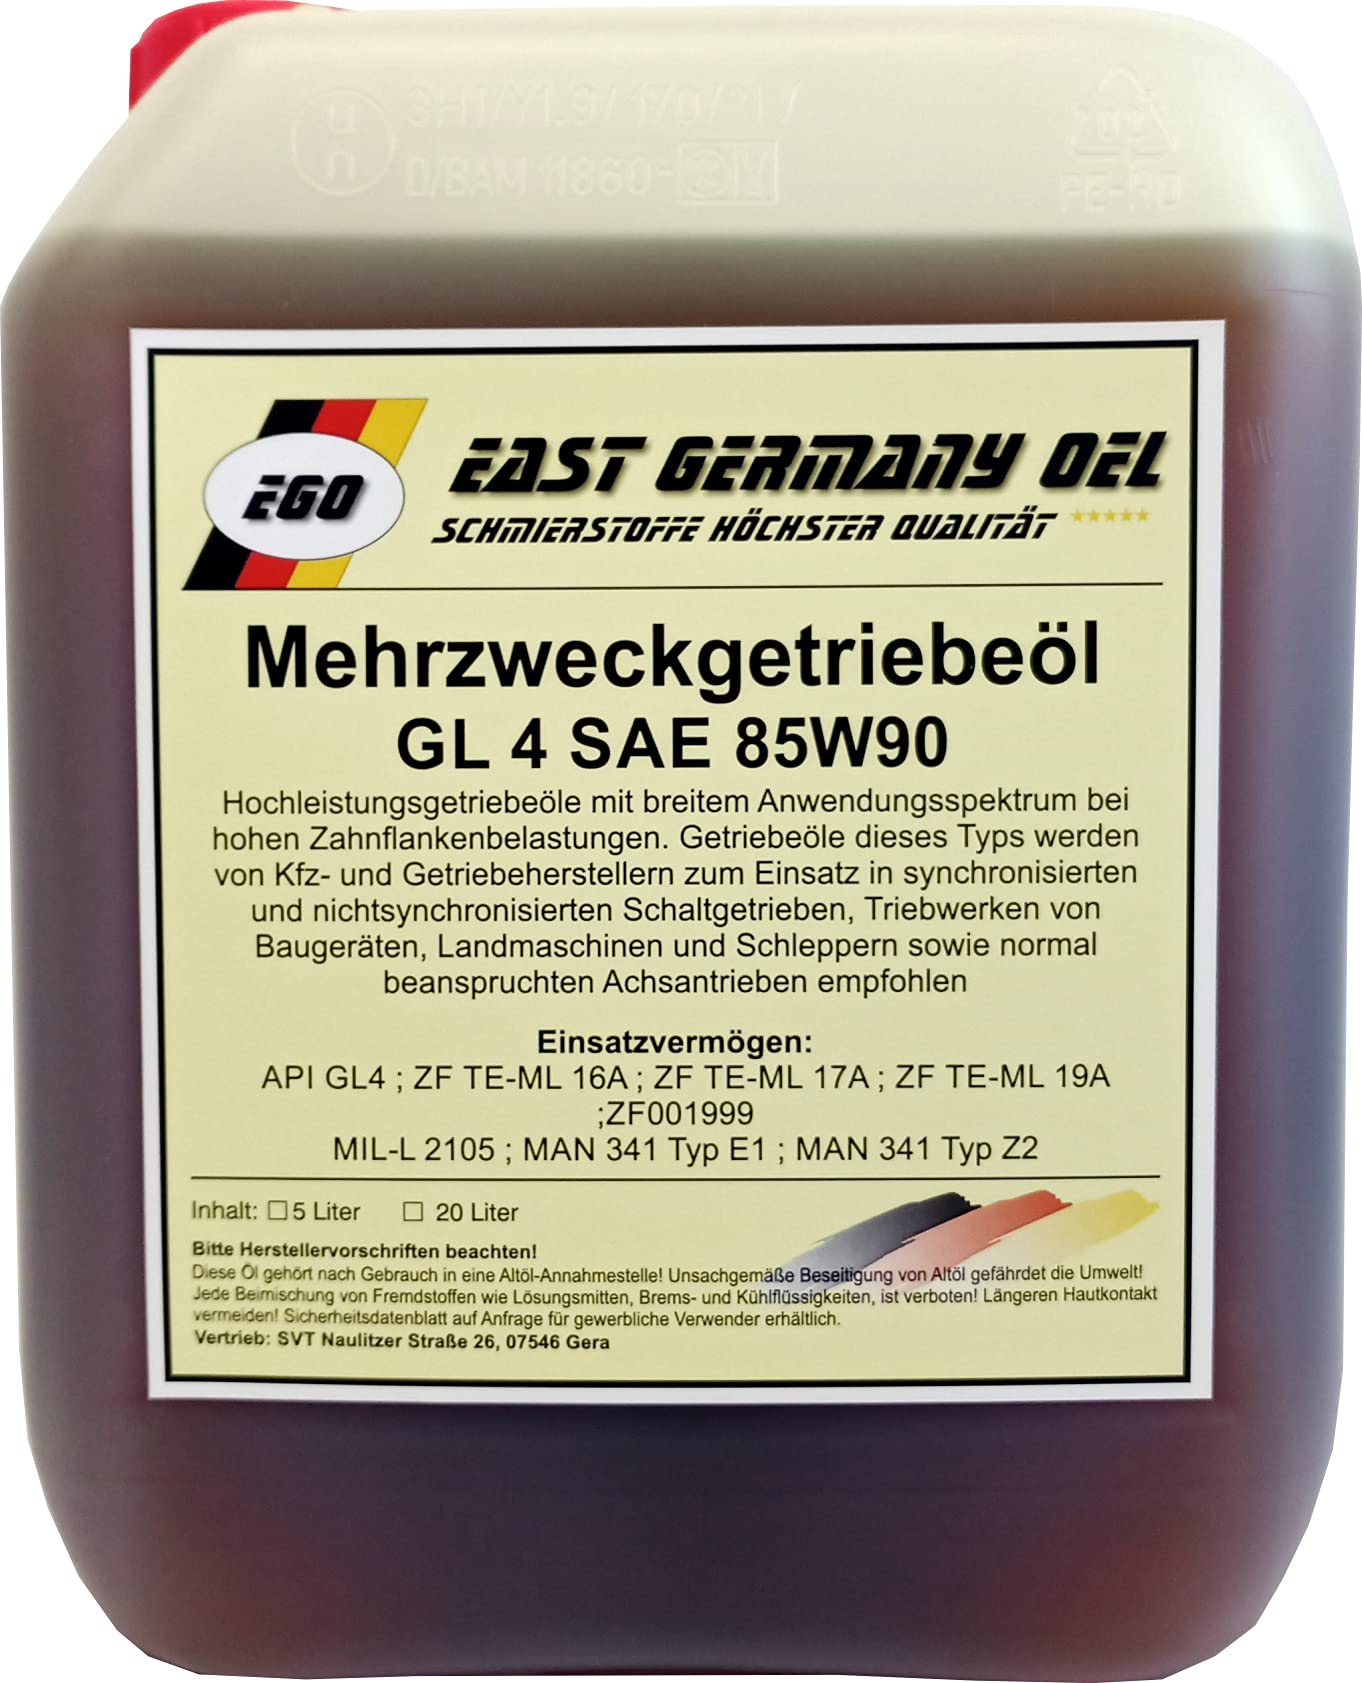 East Germany OIL Getriebeöl GL 4 85W90 Kanister 5 Liter